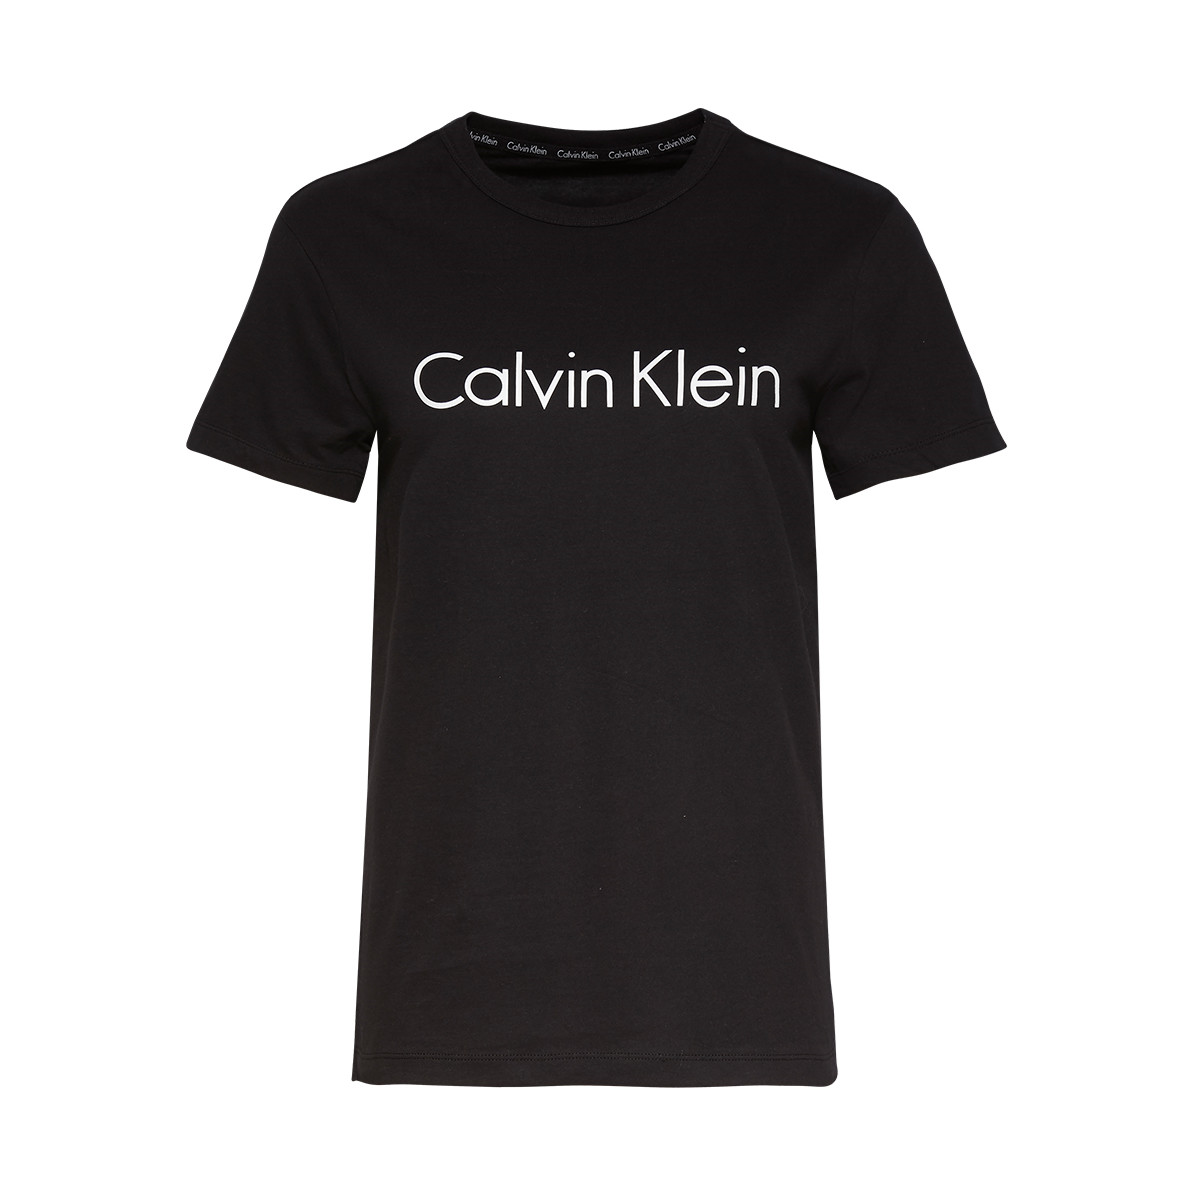 CALVIN KLEIN T-SHIRT S6105 001